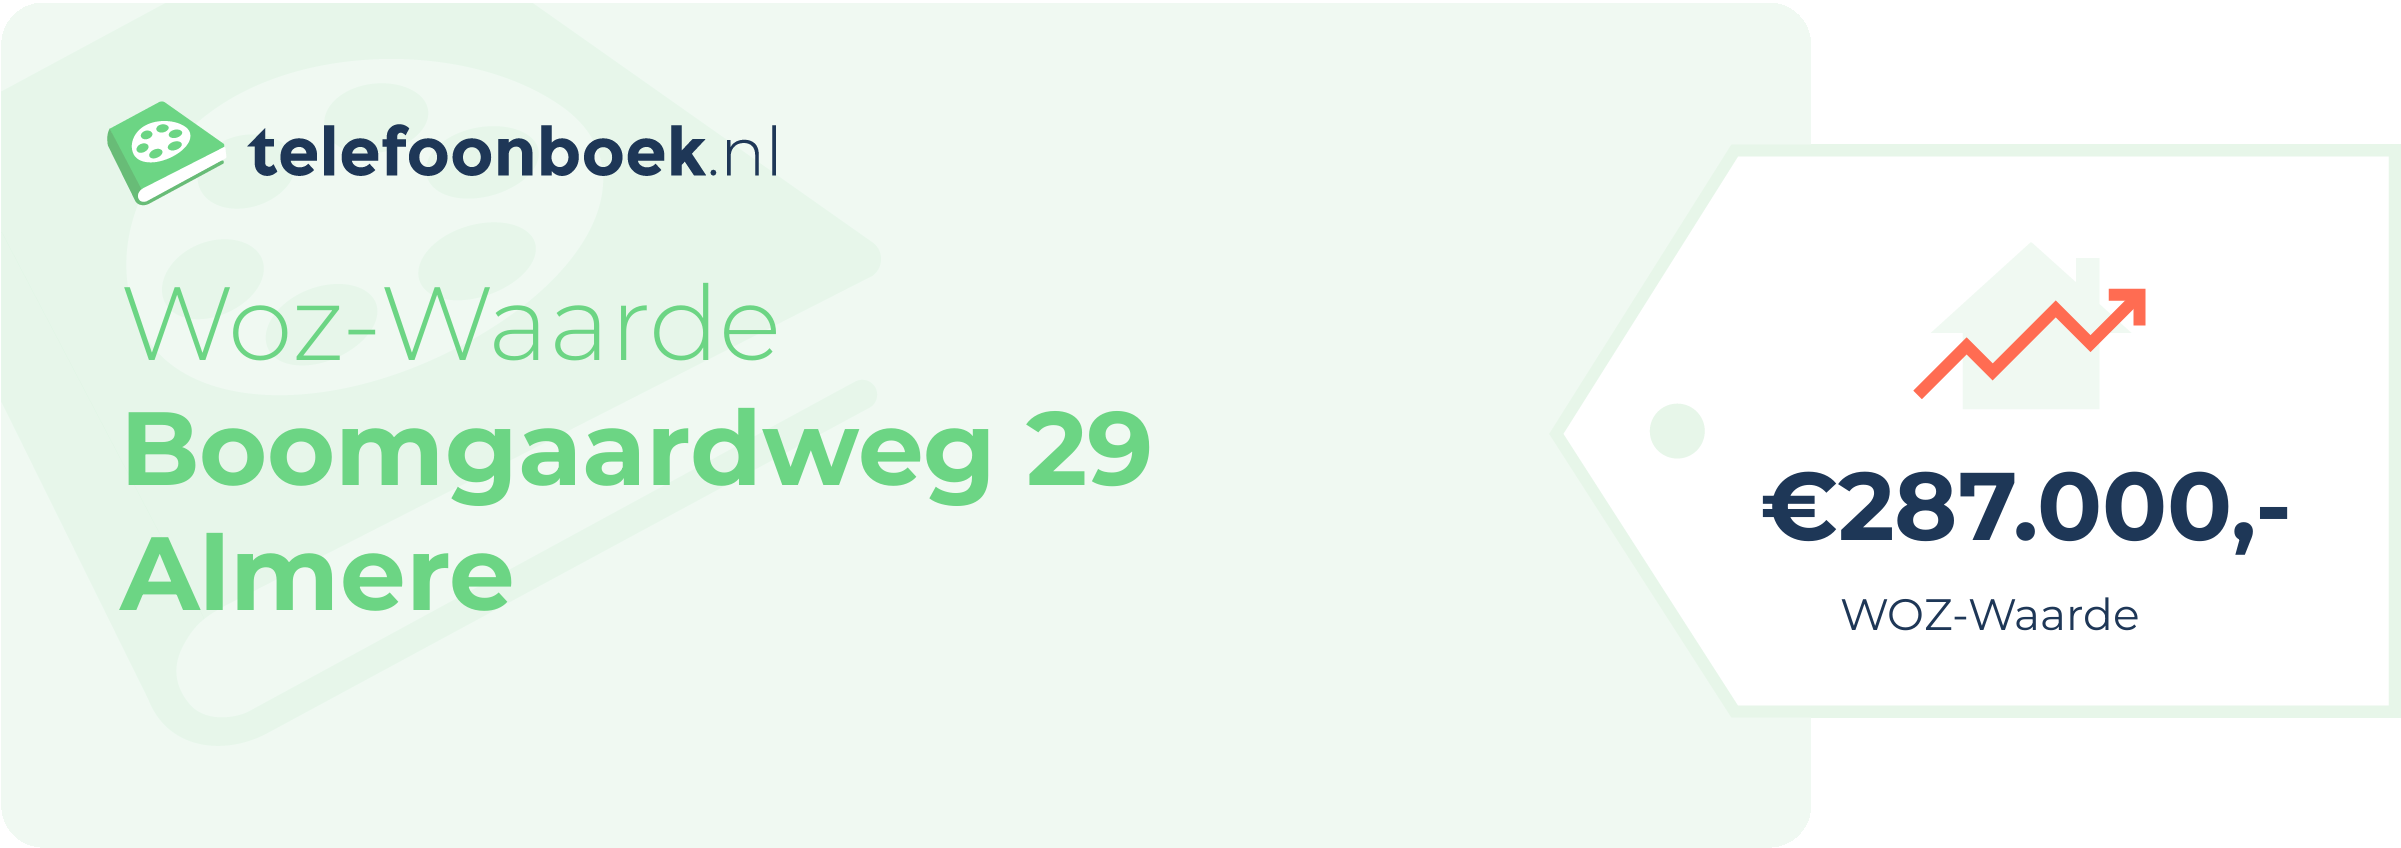 WOZ-waarde Boomgaardweg 29 Almere